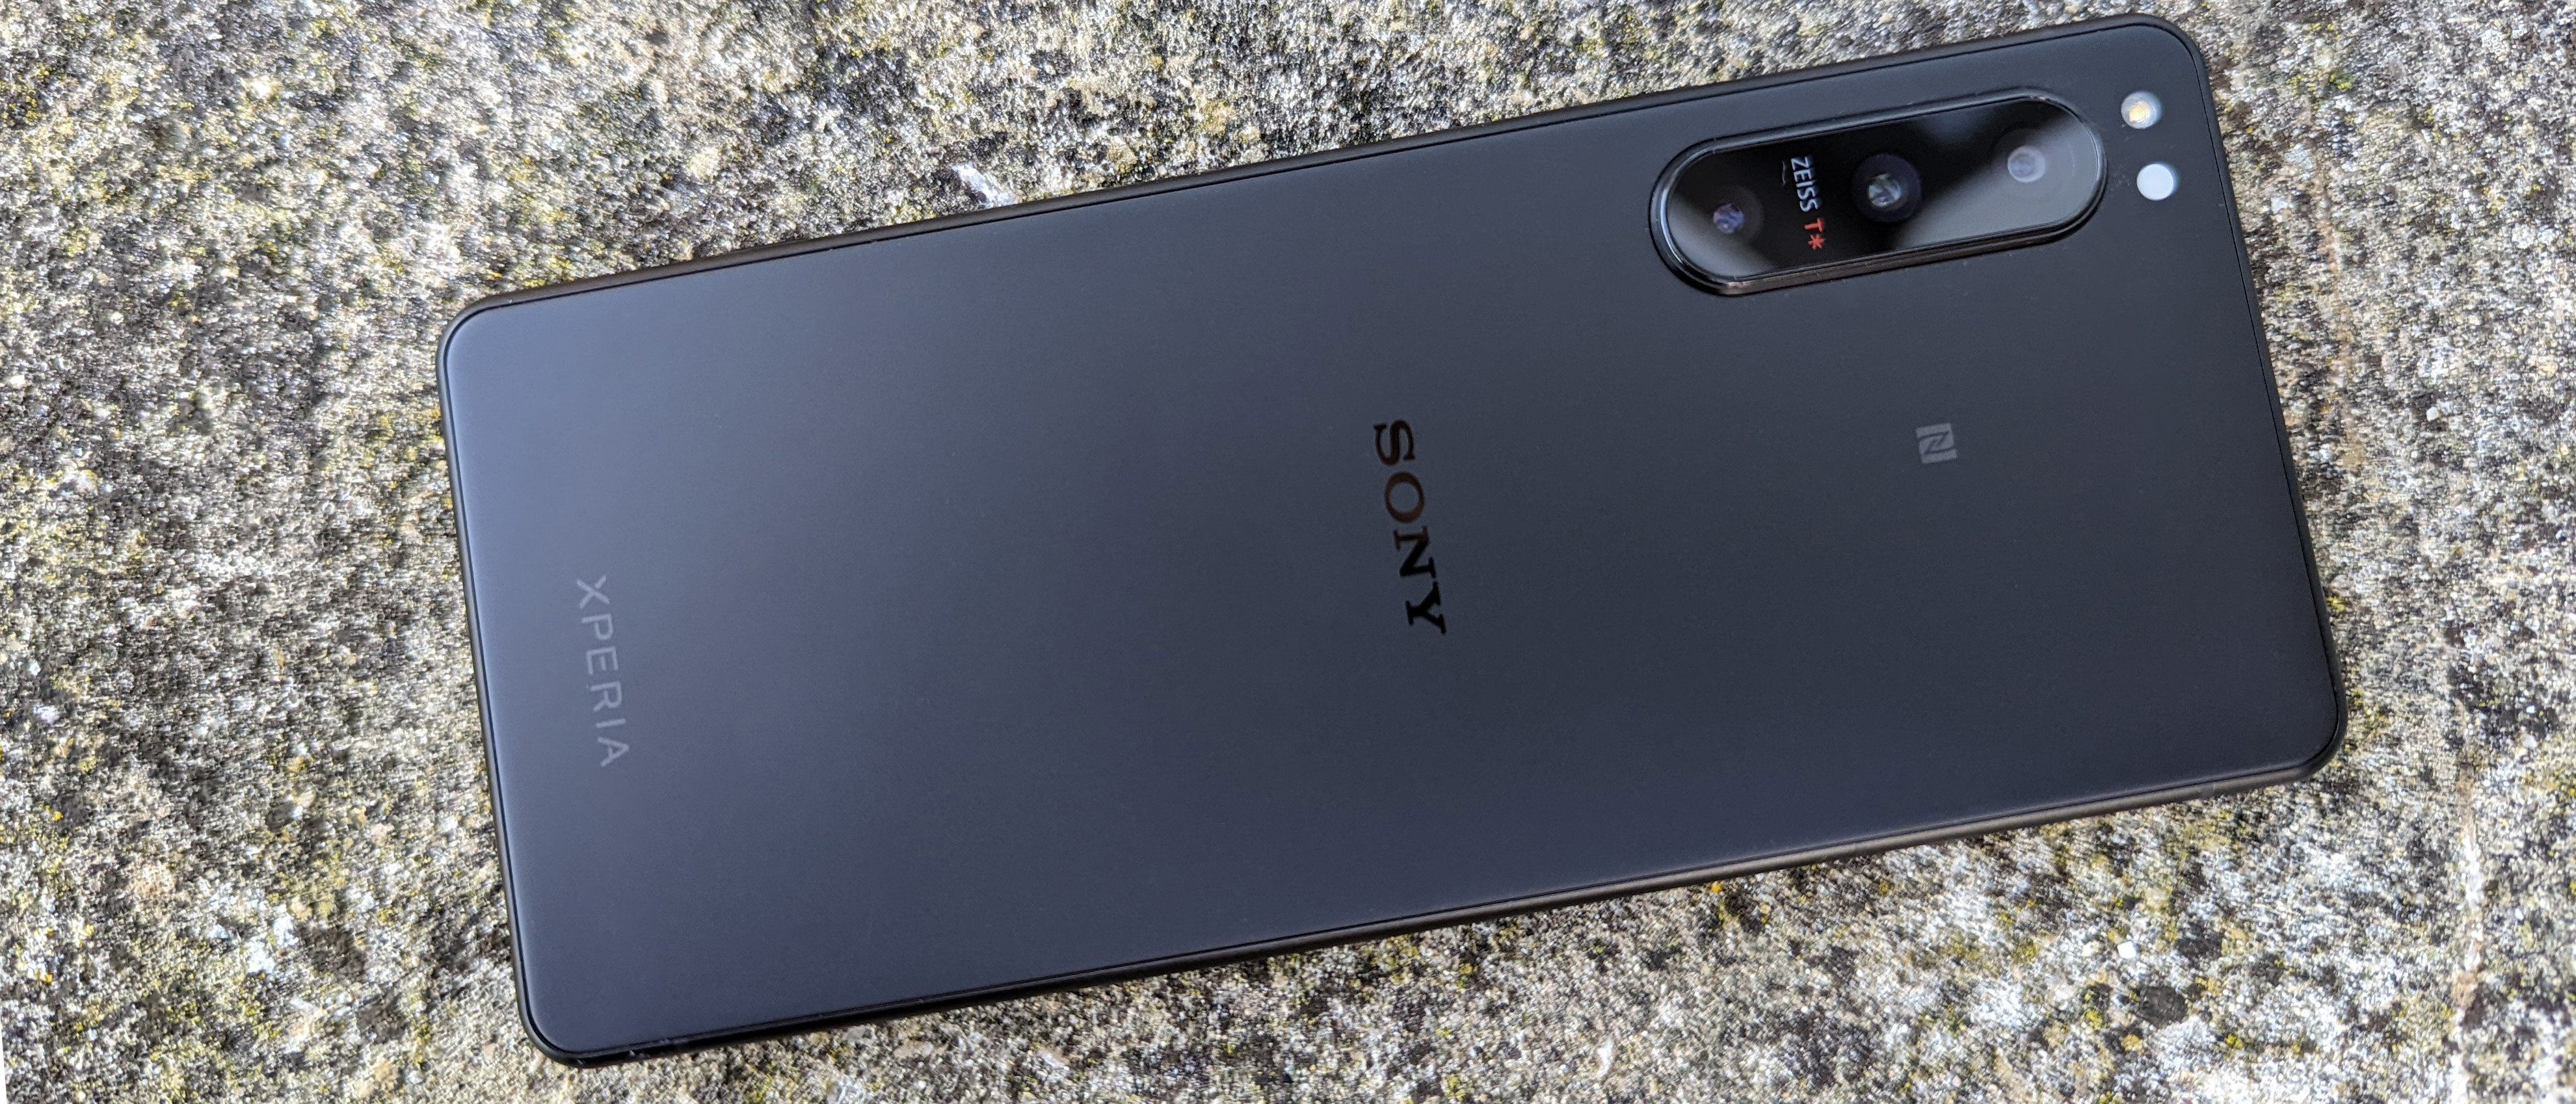 Sony Xperia 5 IV review: Design, build quality, handling